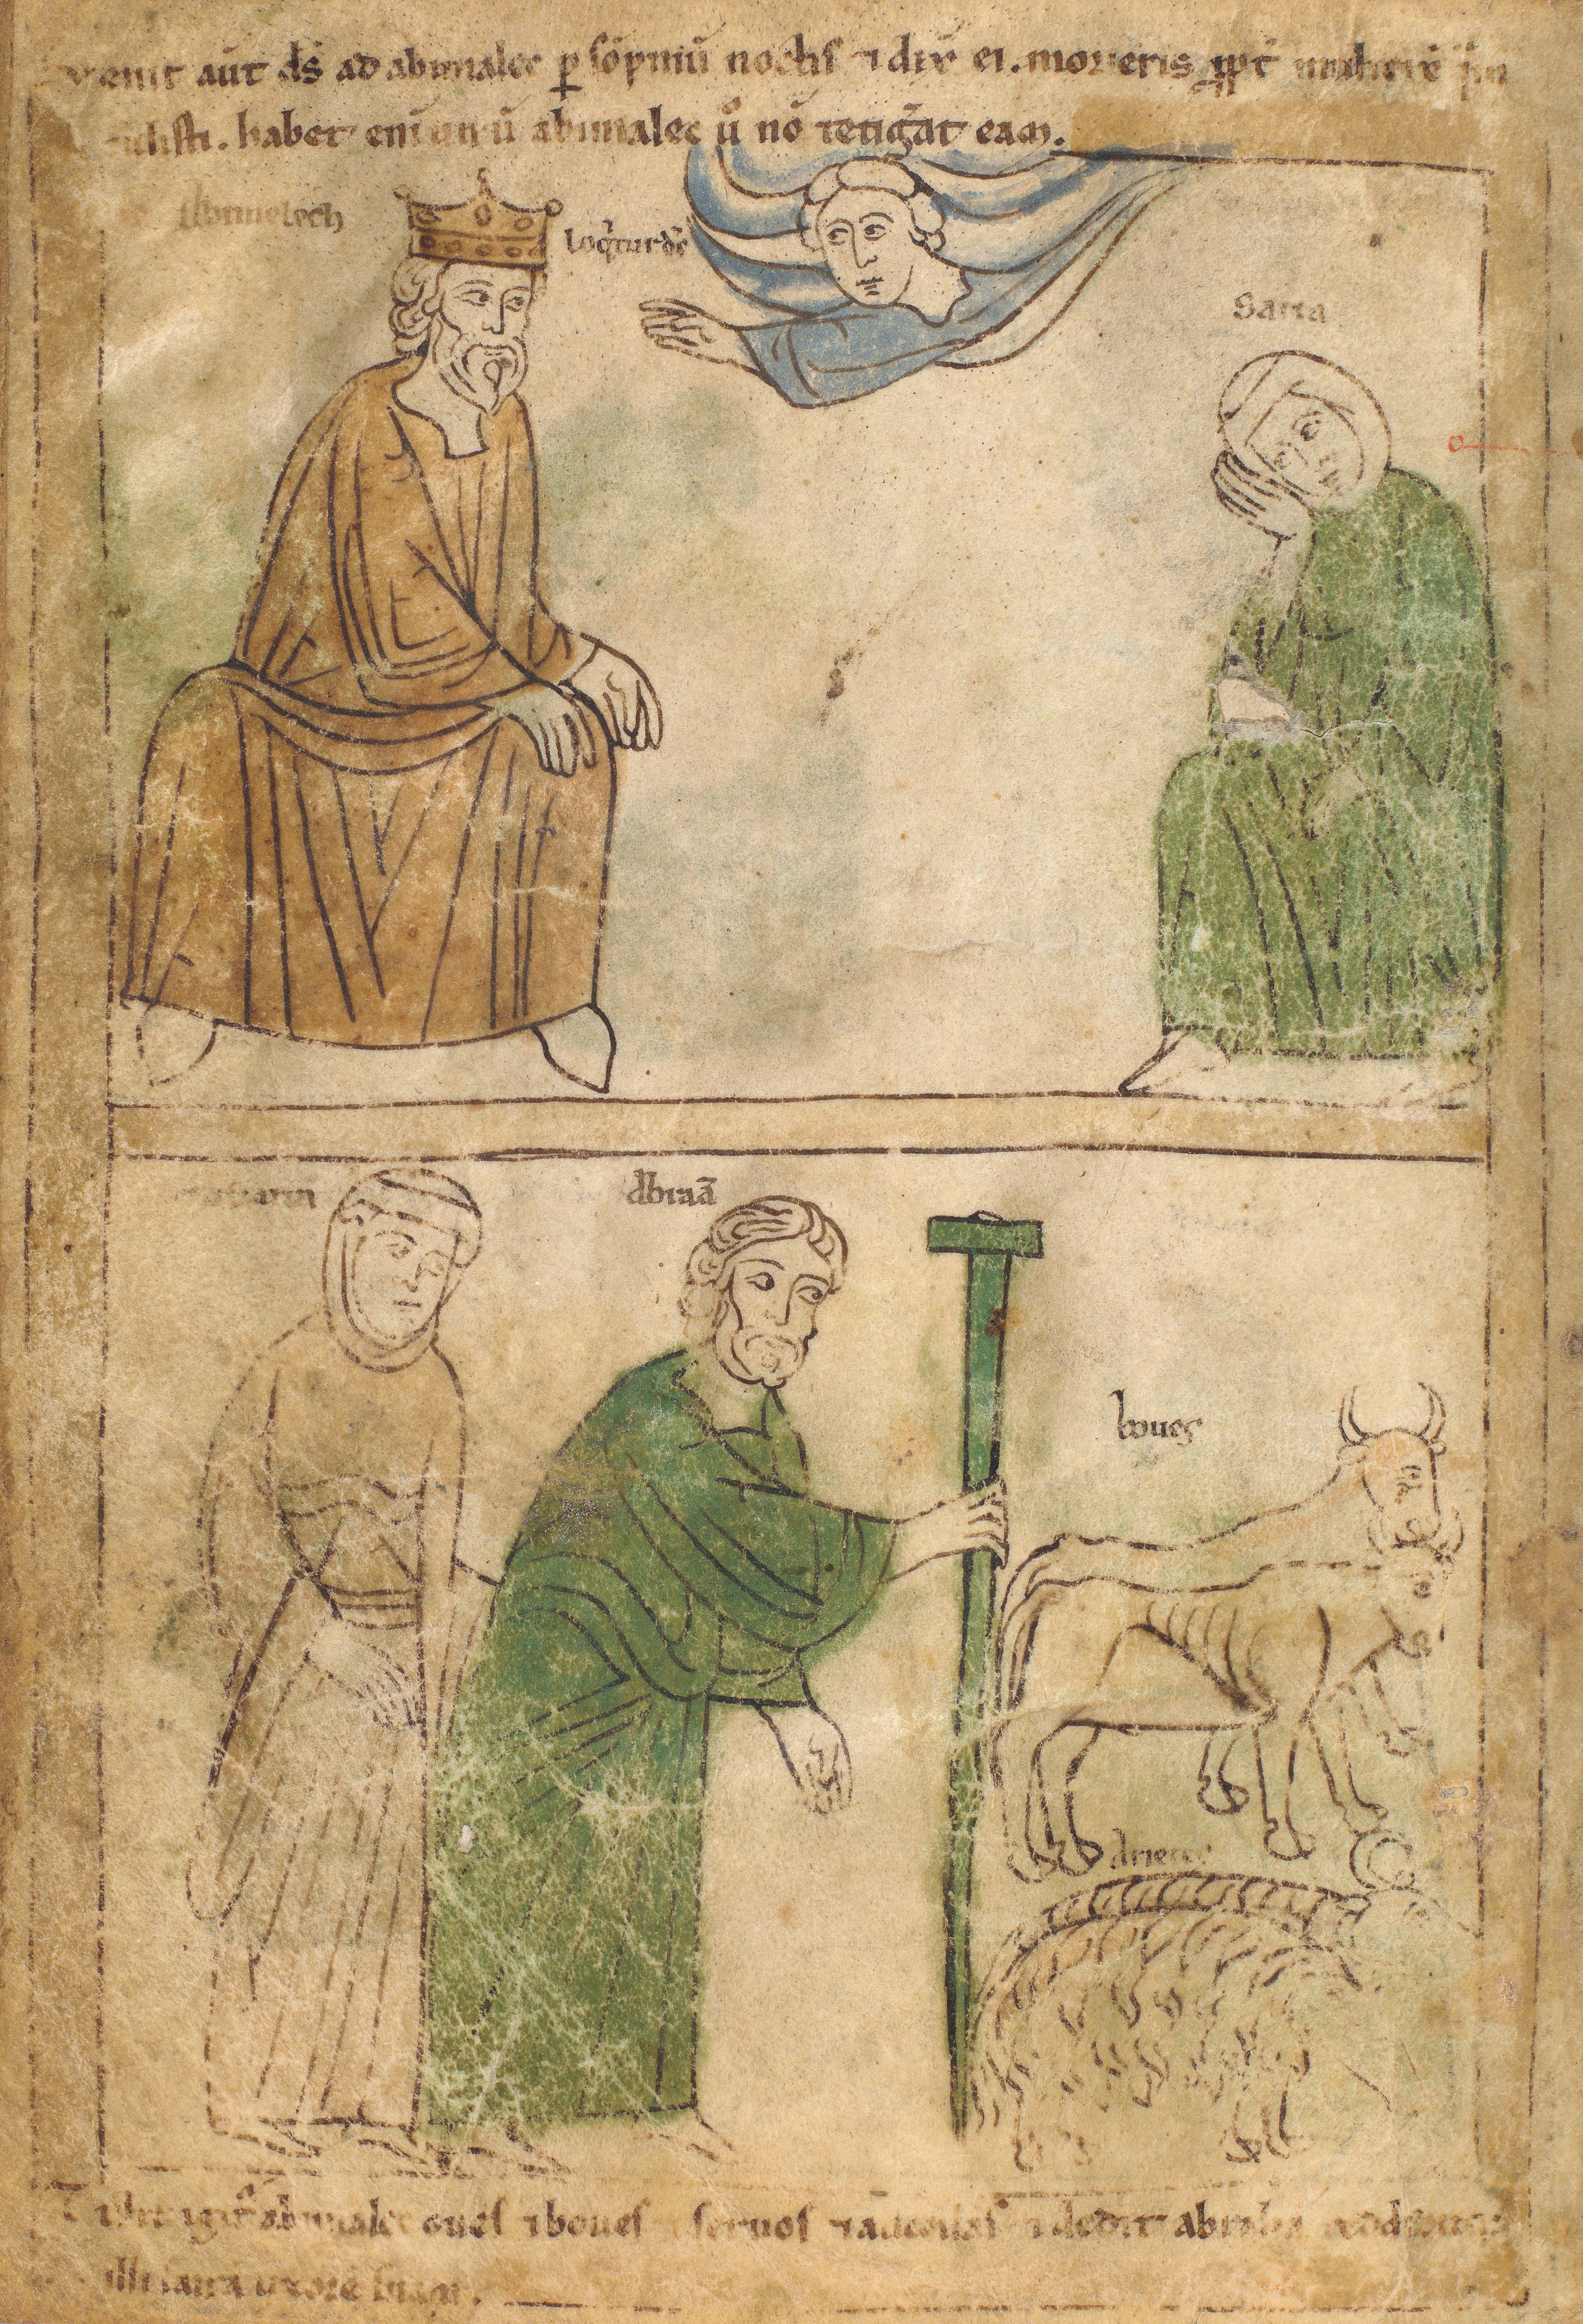 Seconde Bible de Pampelune, folio 18v.